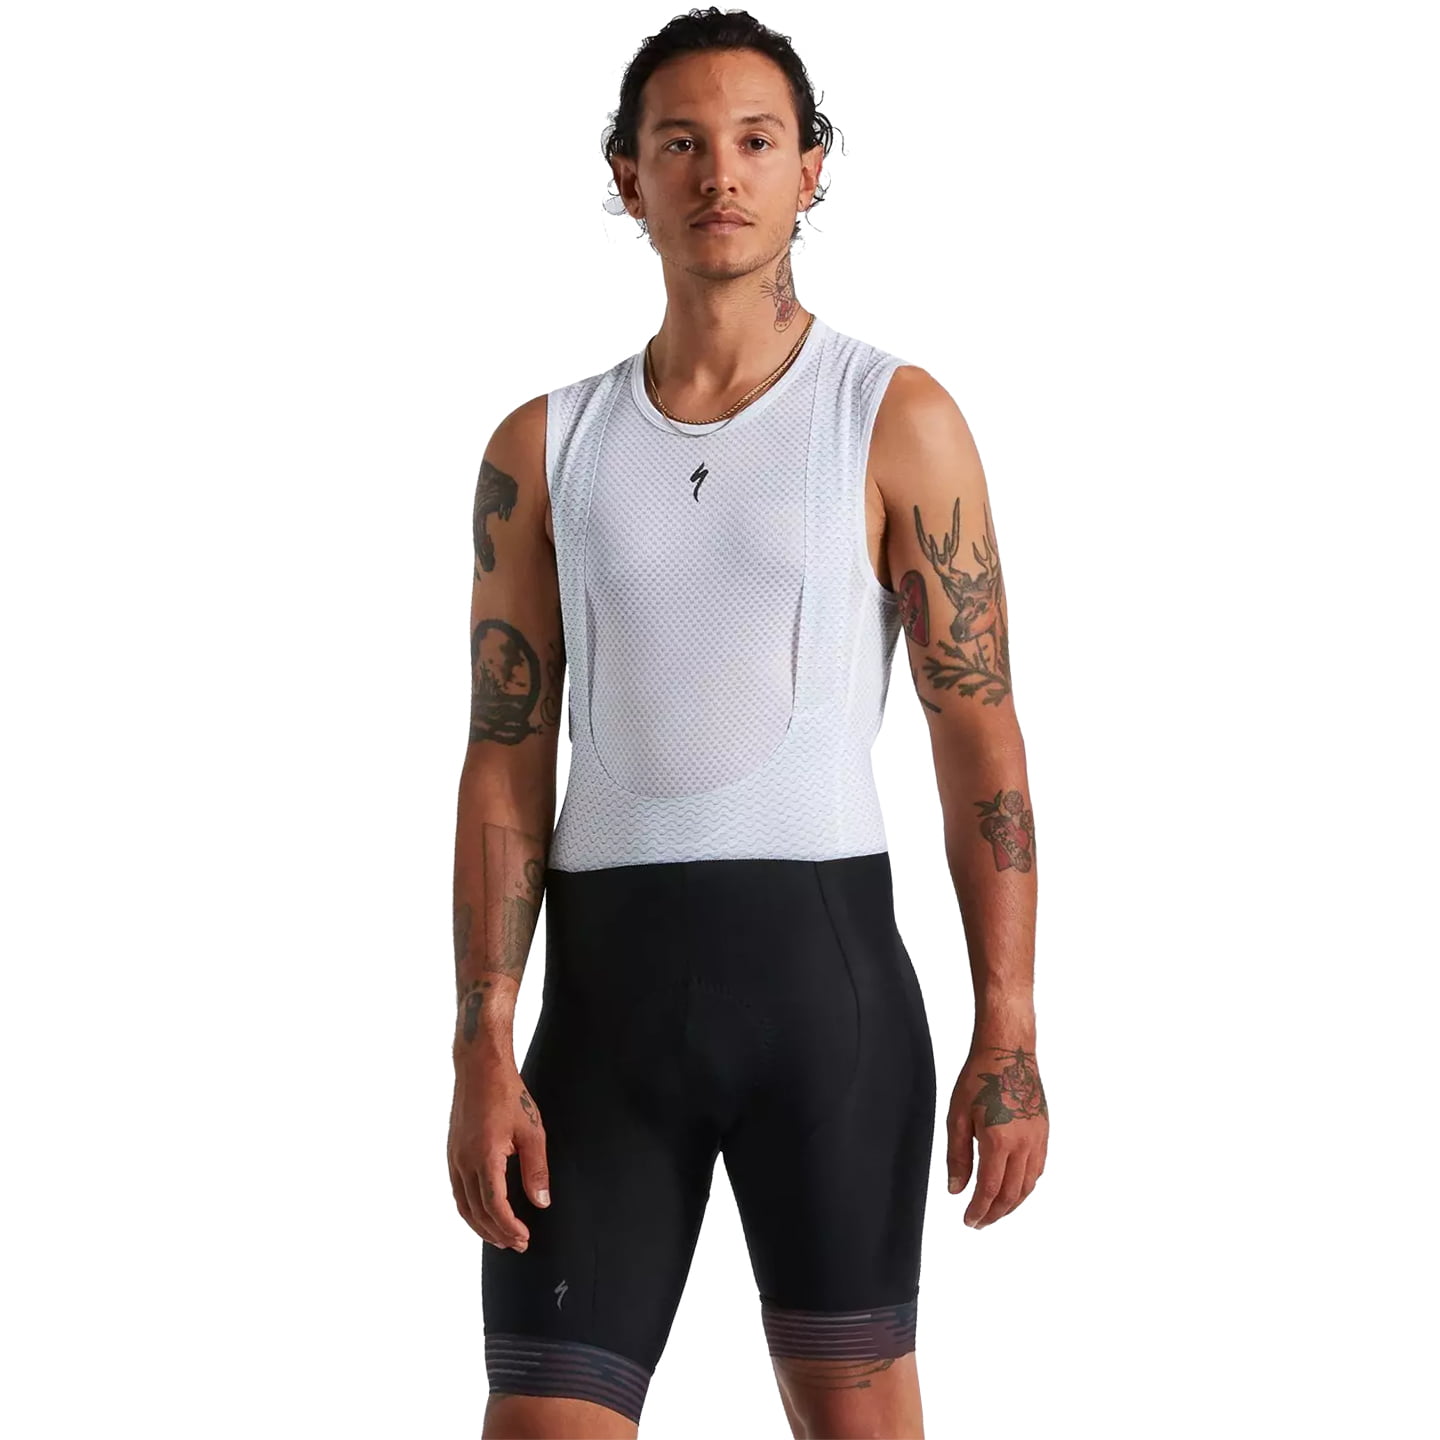 SPECIALIZED SL Blur Bib Shorts Bib Shorts, for men, size XL, Cycle shorts, Cycling clothing